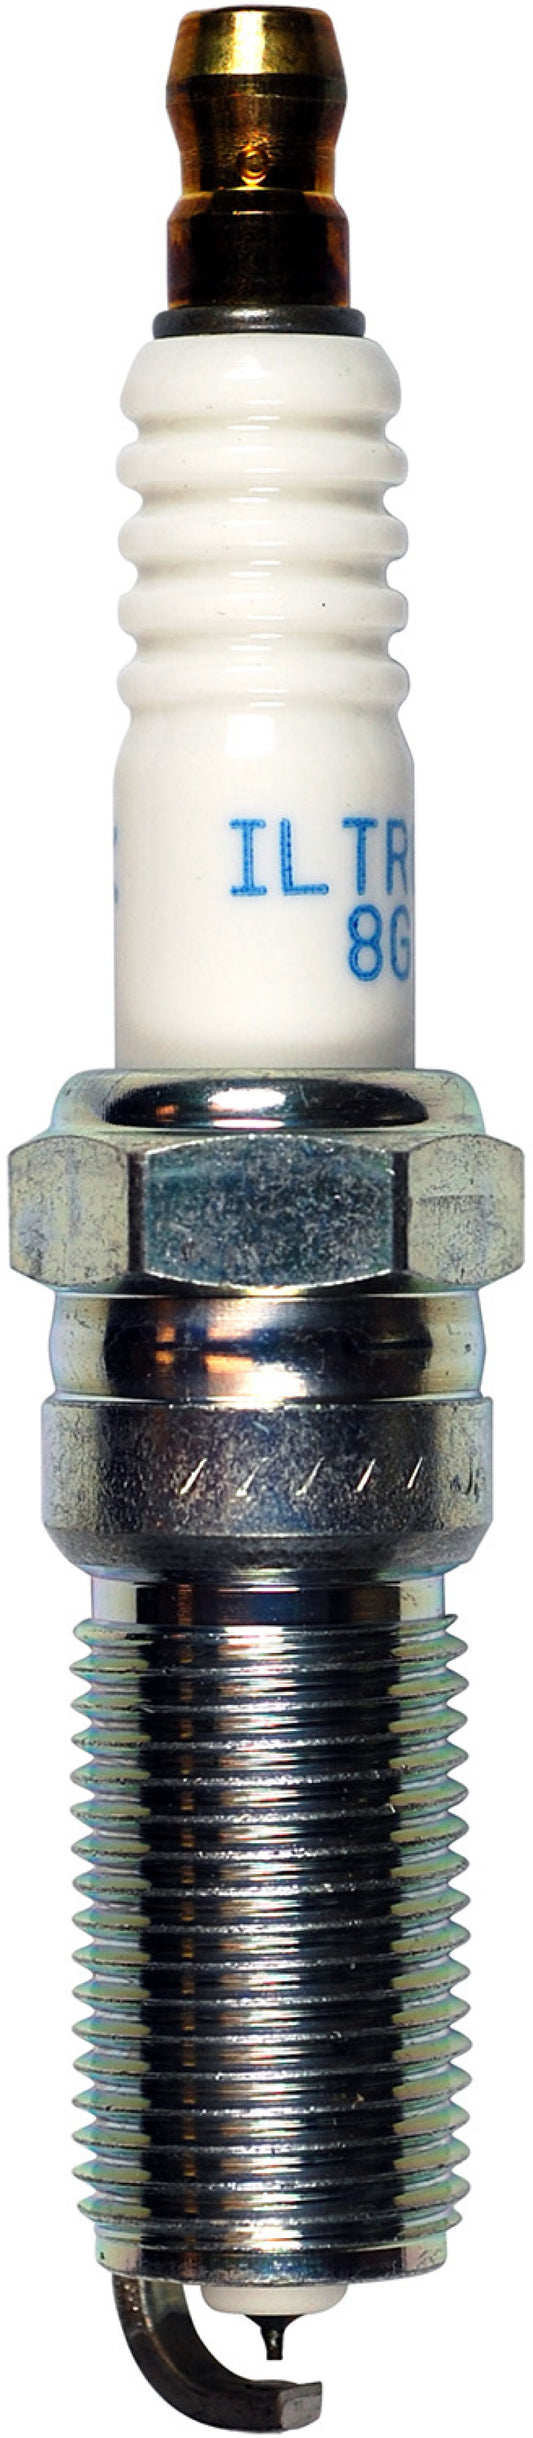 NGK Laser Iridium Spark Plug Box of 4 (ILTR6H8G)